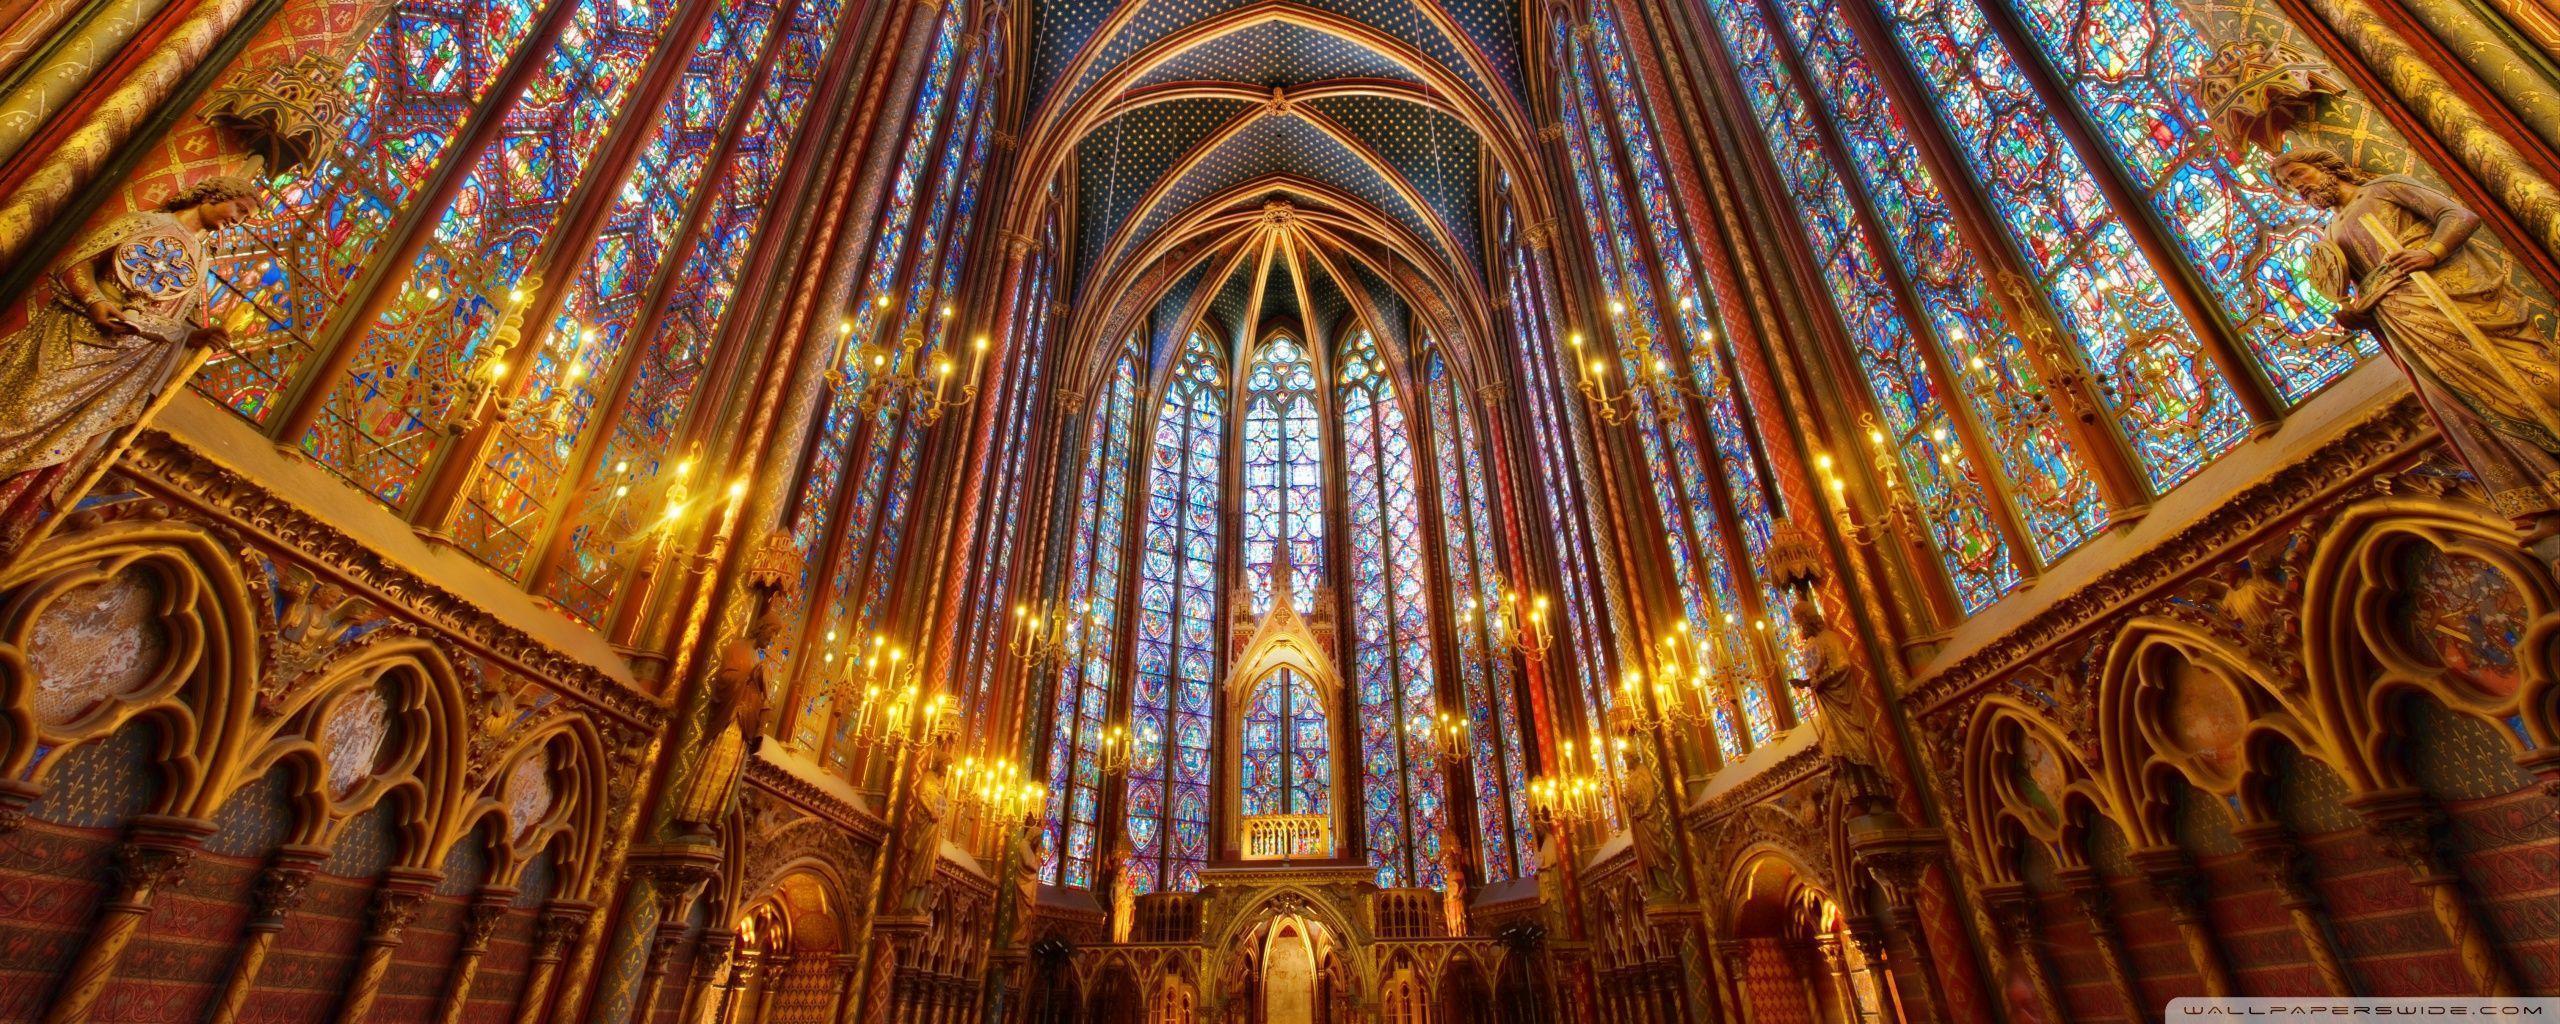 Cathedral Interior HD desktop wallpaper, High Definition